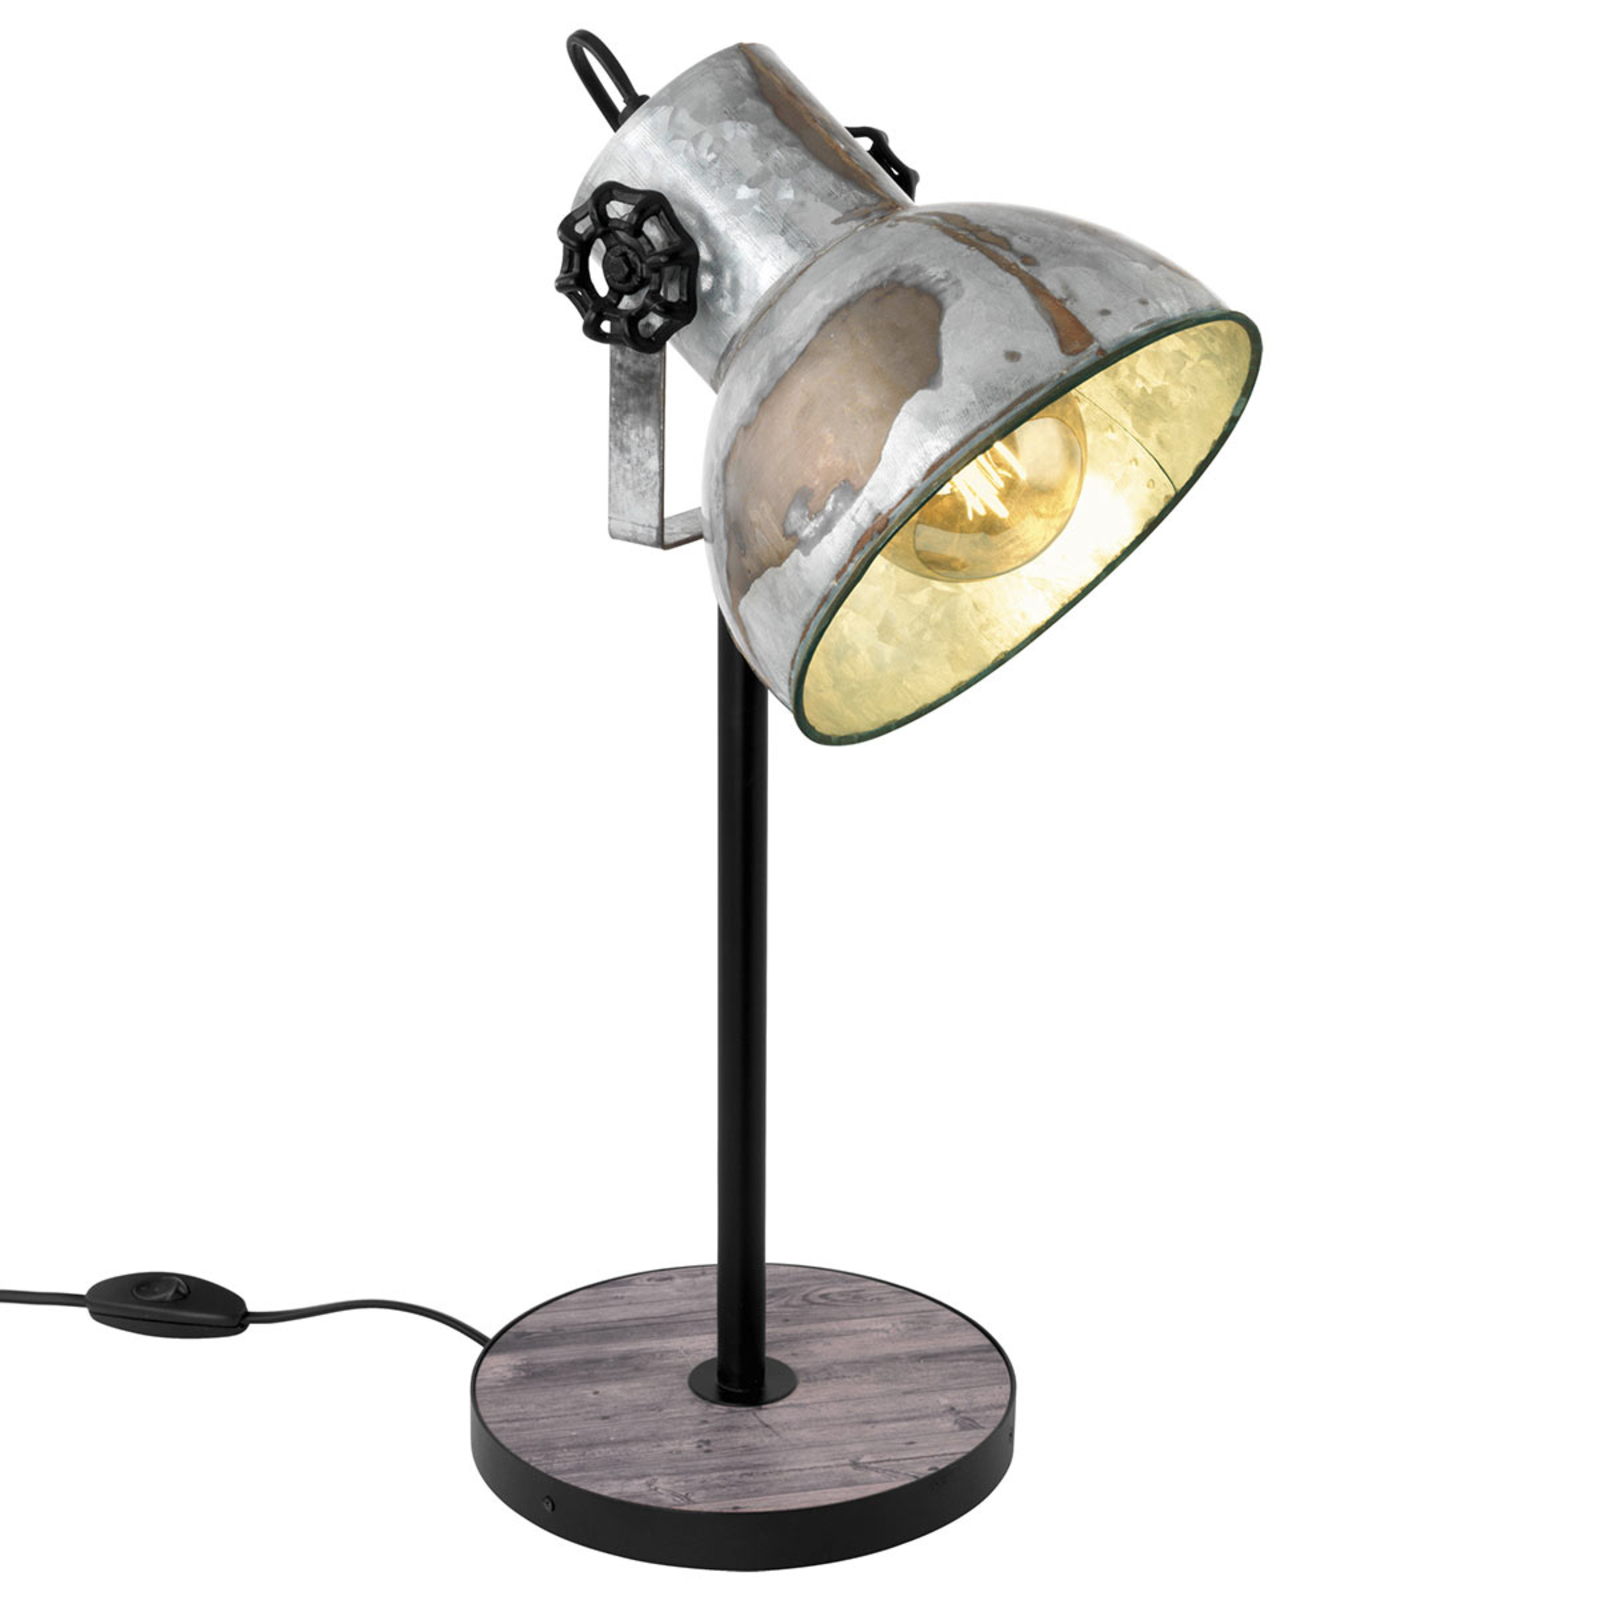 Tischlampe Barnstaple im Industrie-Design